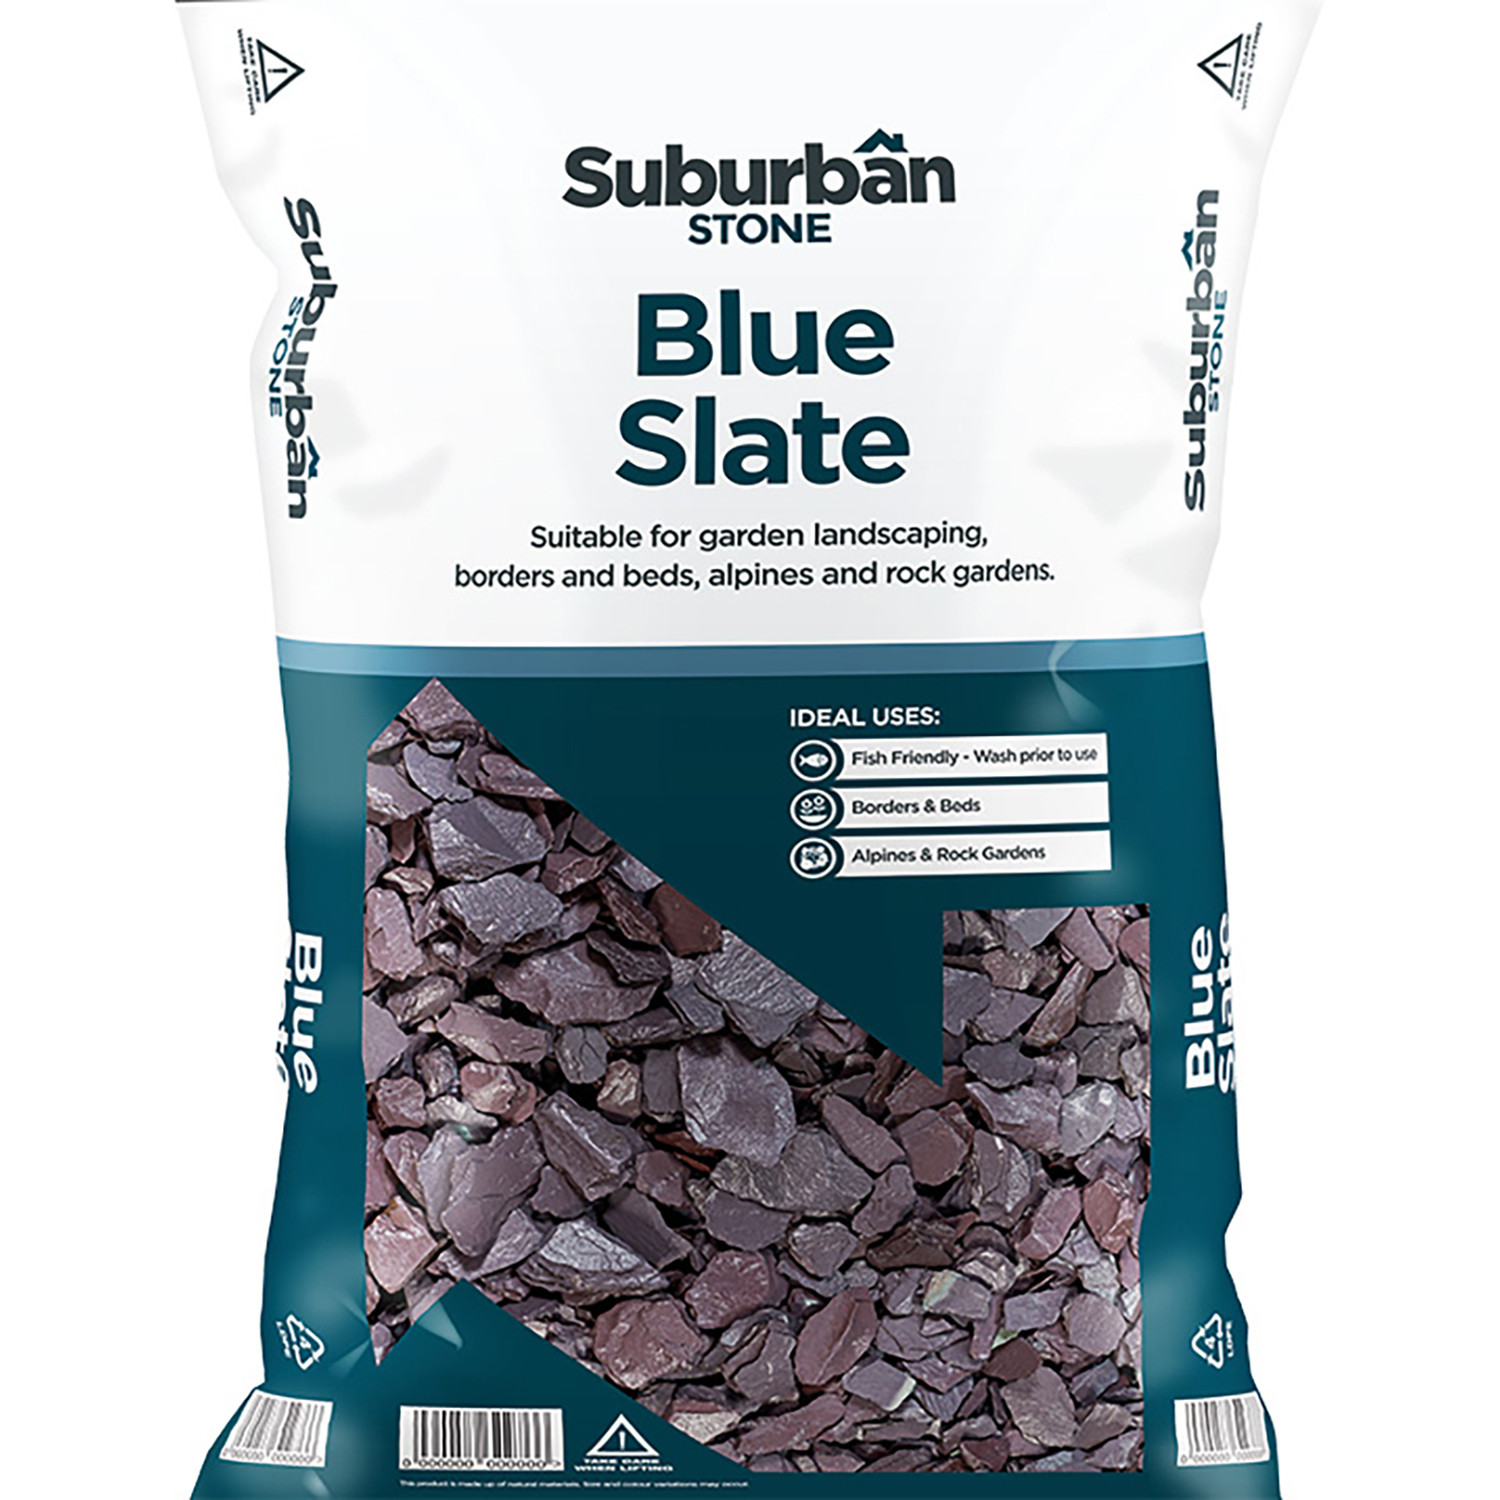 Suburban Stone Blue Slate Chippings 20kg Image 1